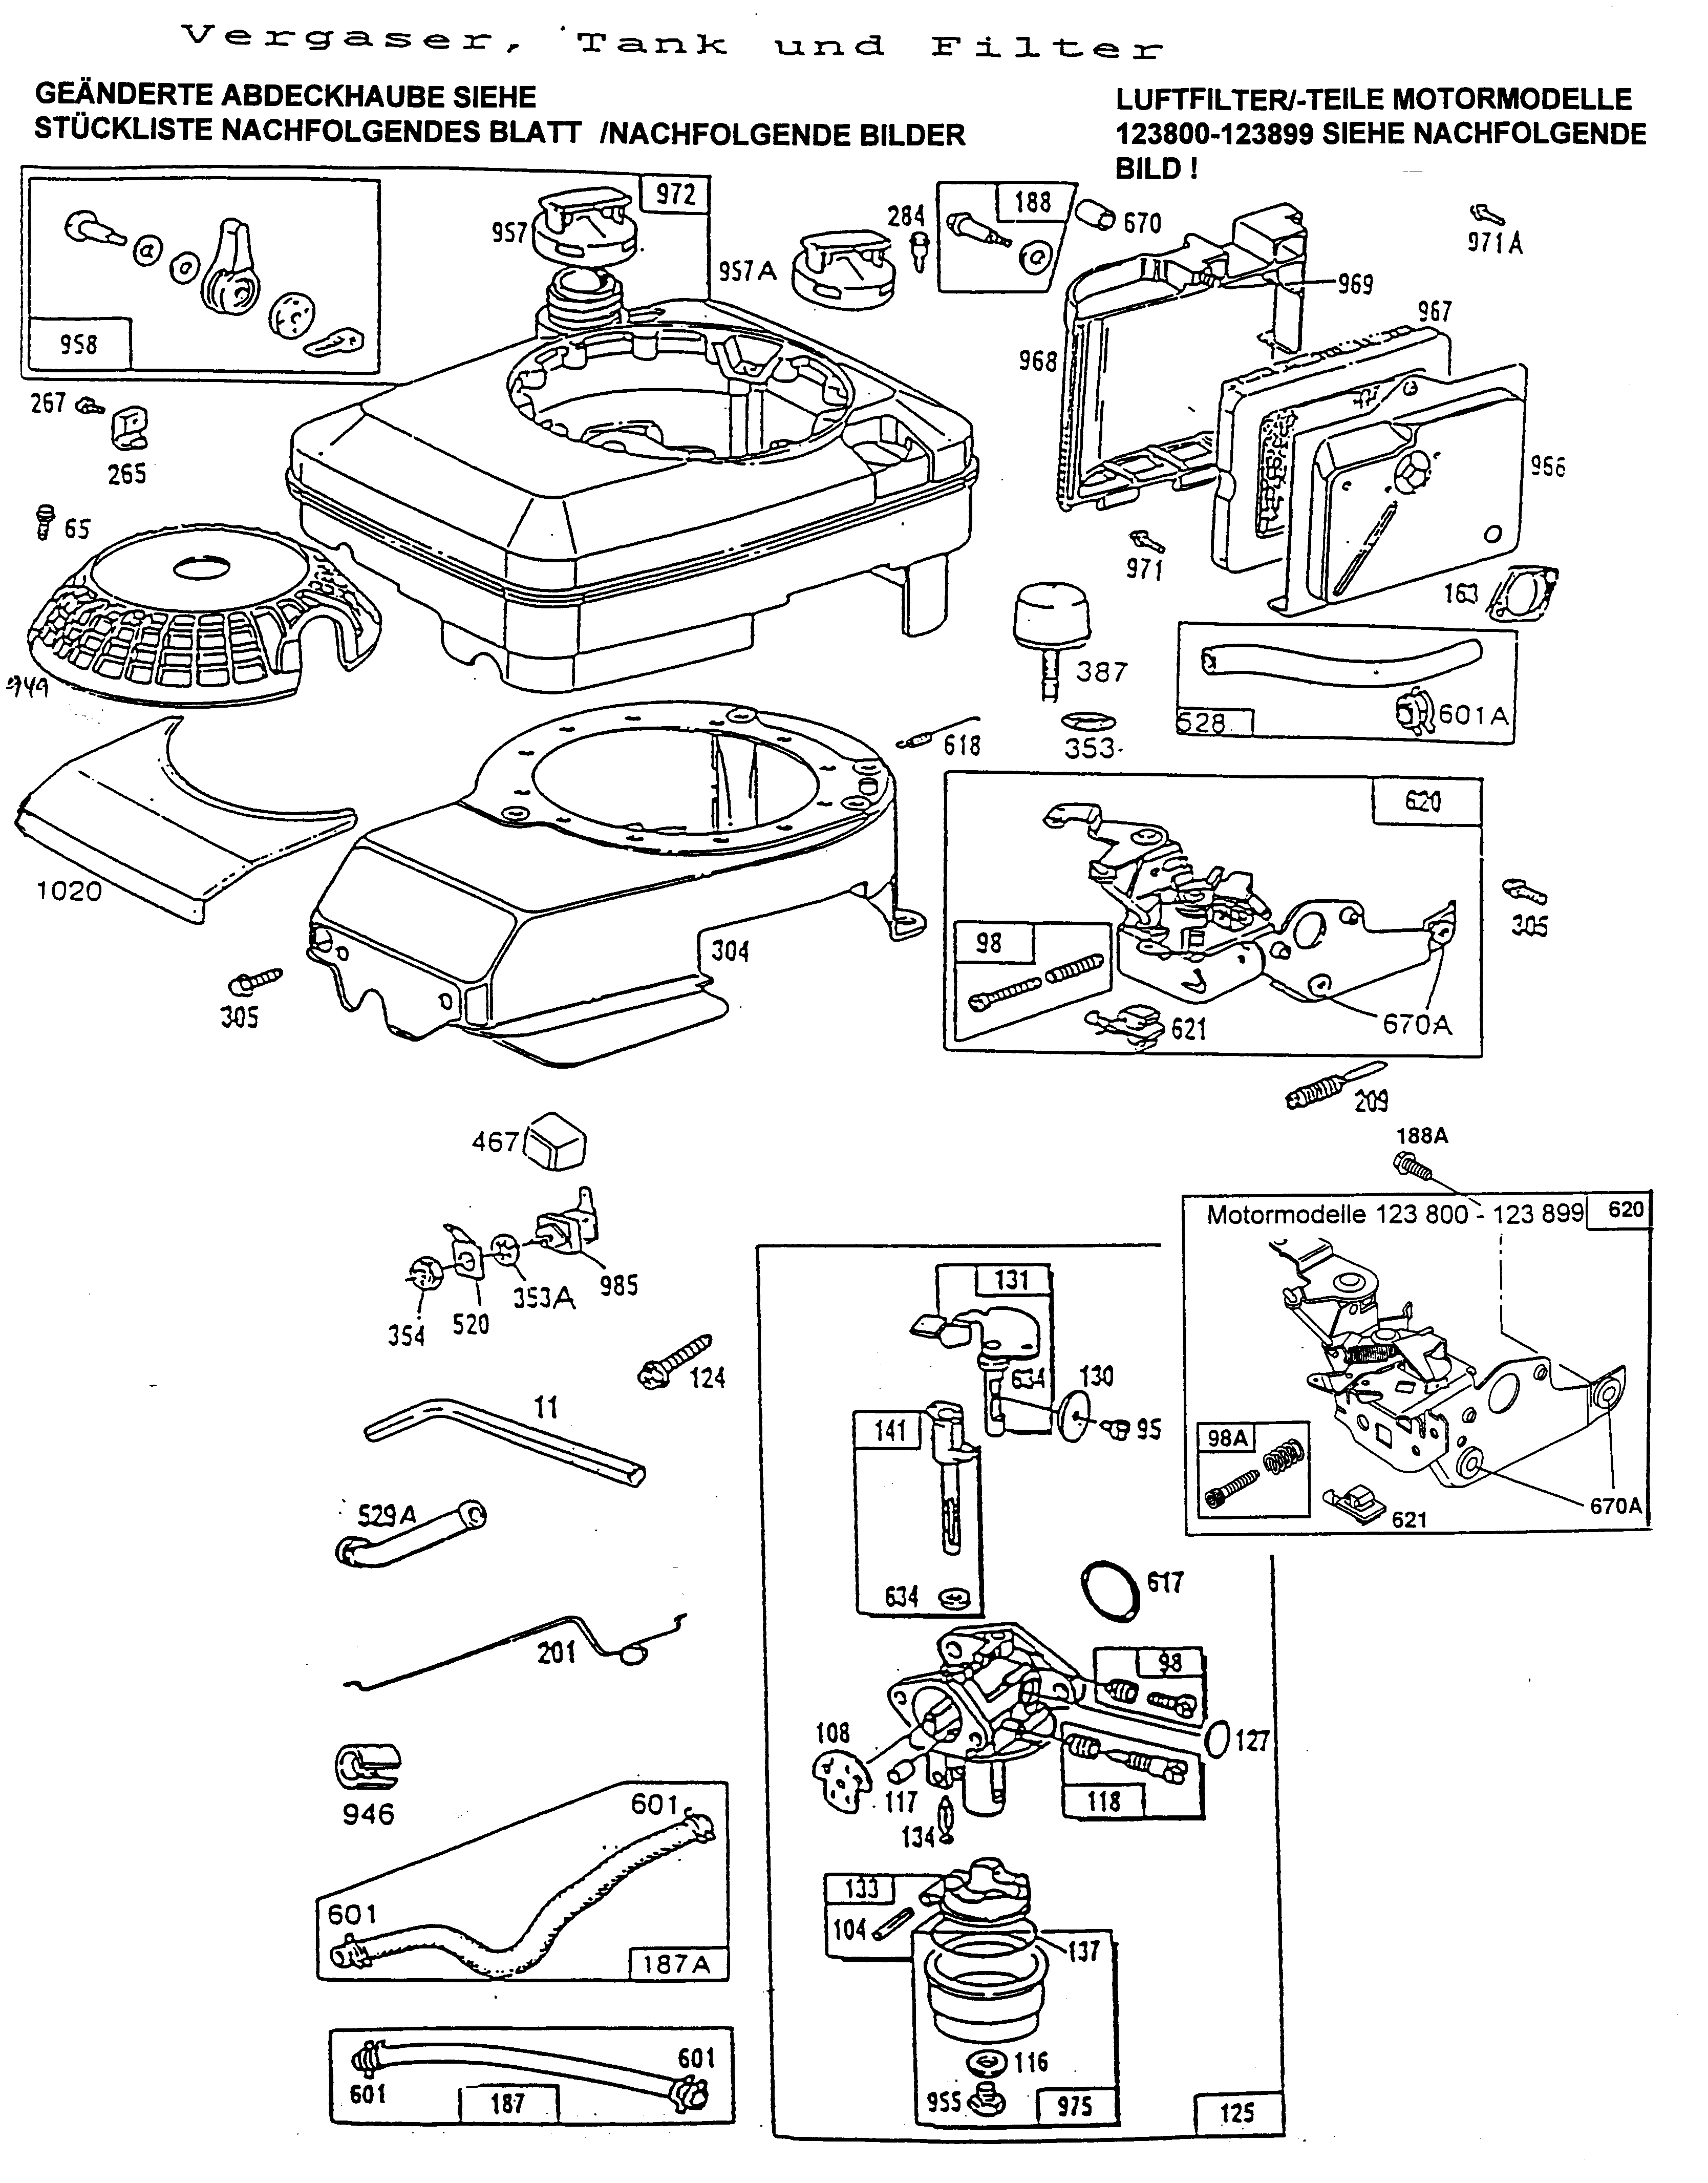 Quattro 40 lawn mower manual